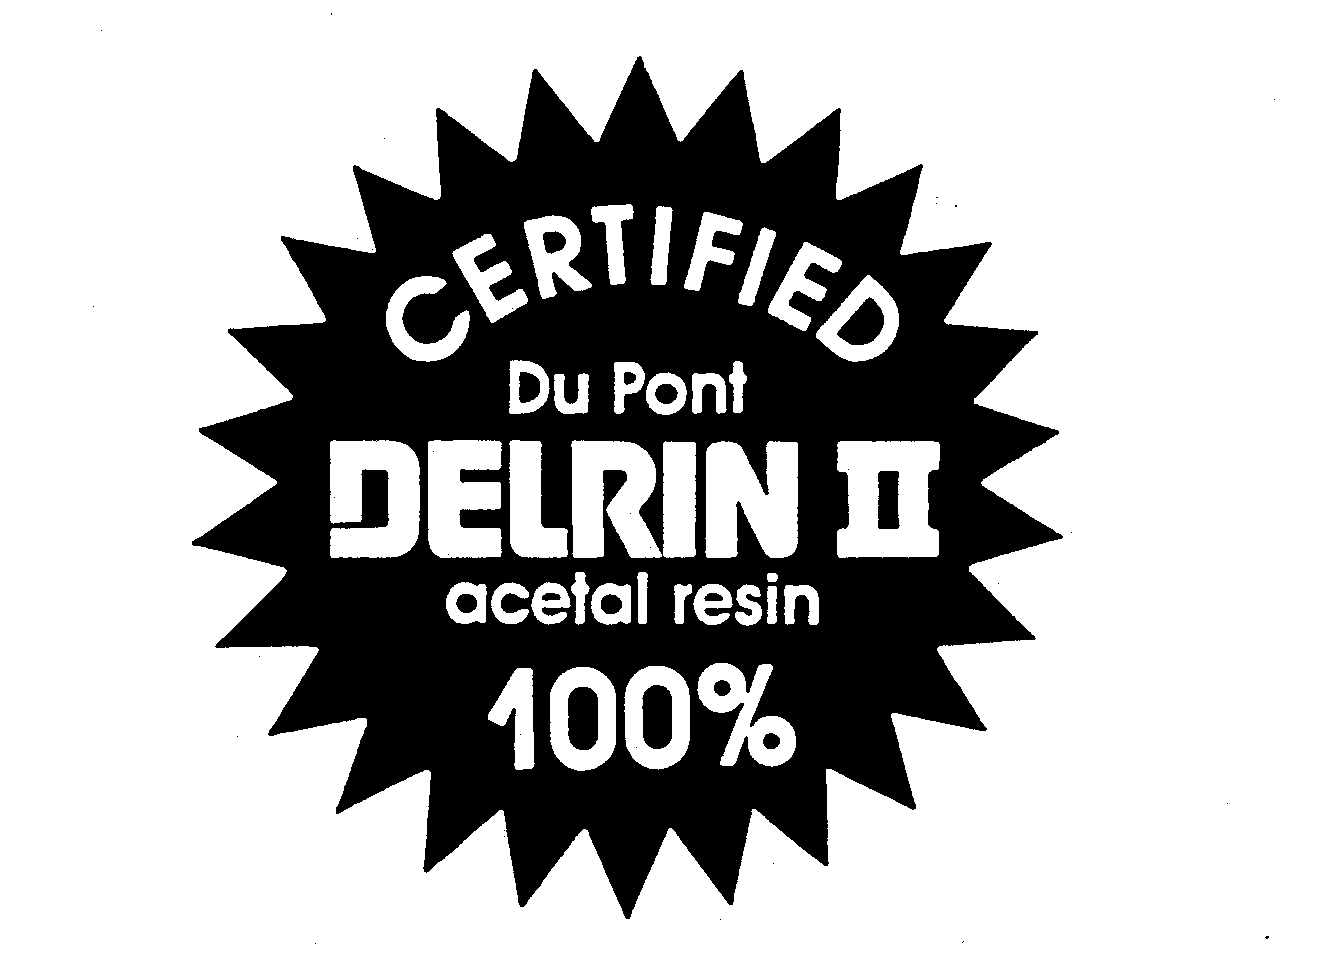  CERTIFIED DU PONT DELRIN II ACETAL RESIN 100%